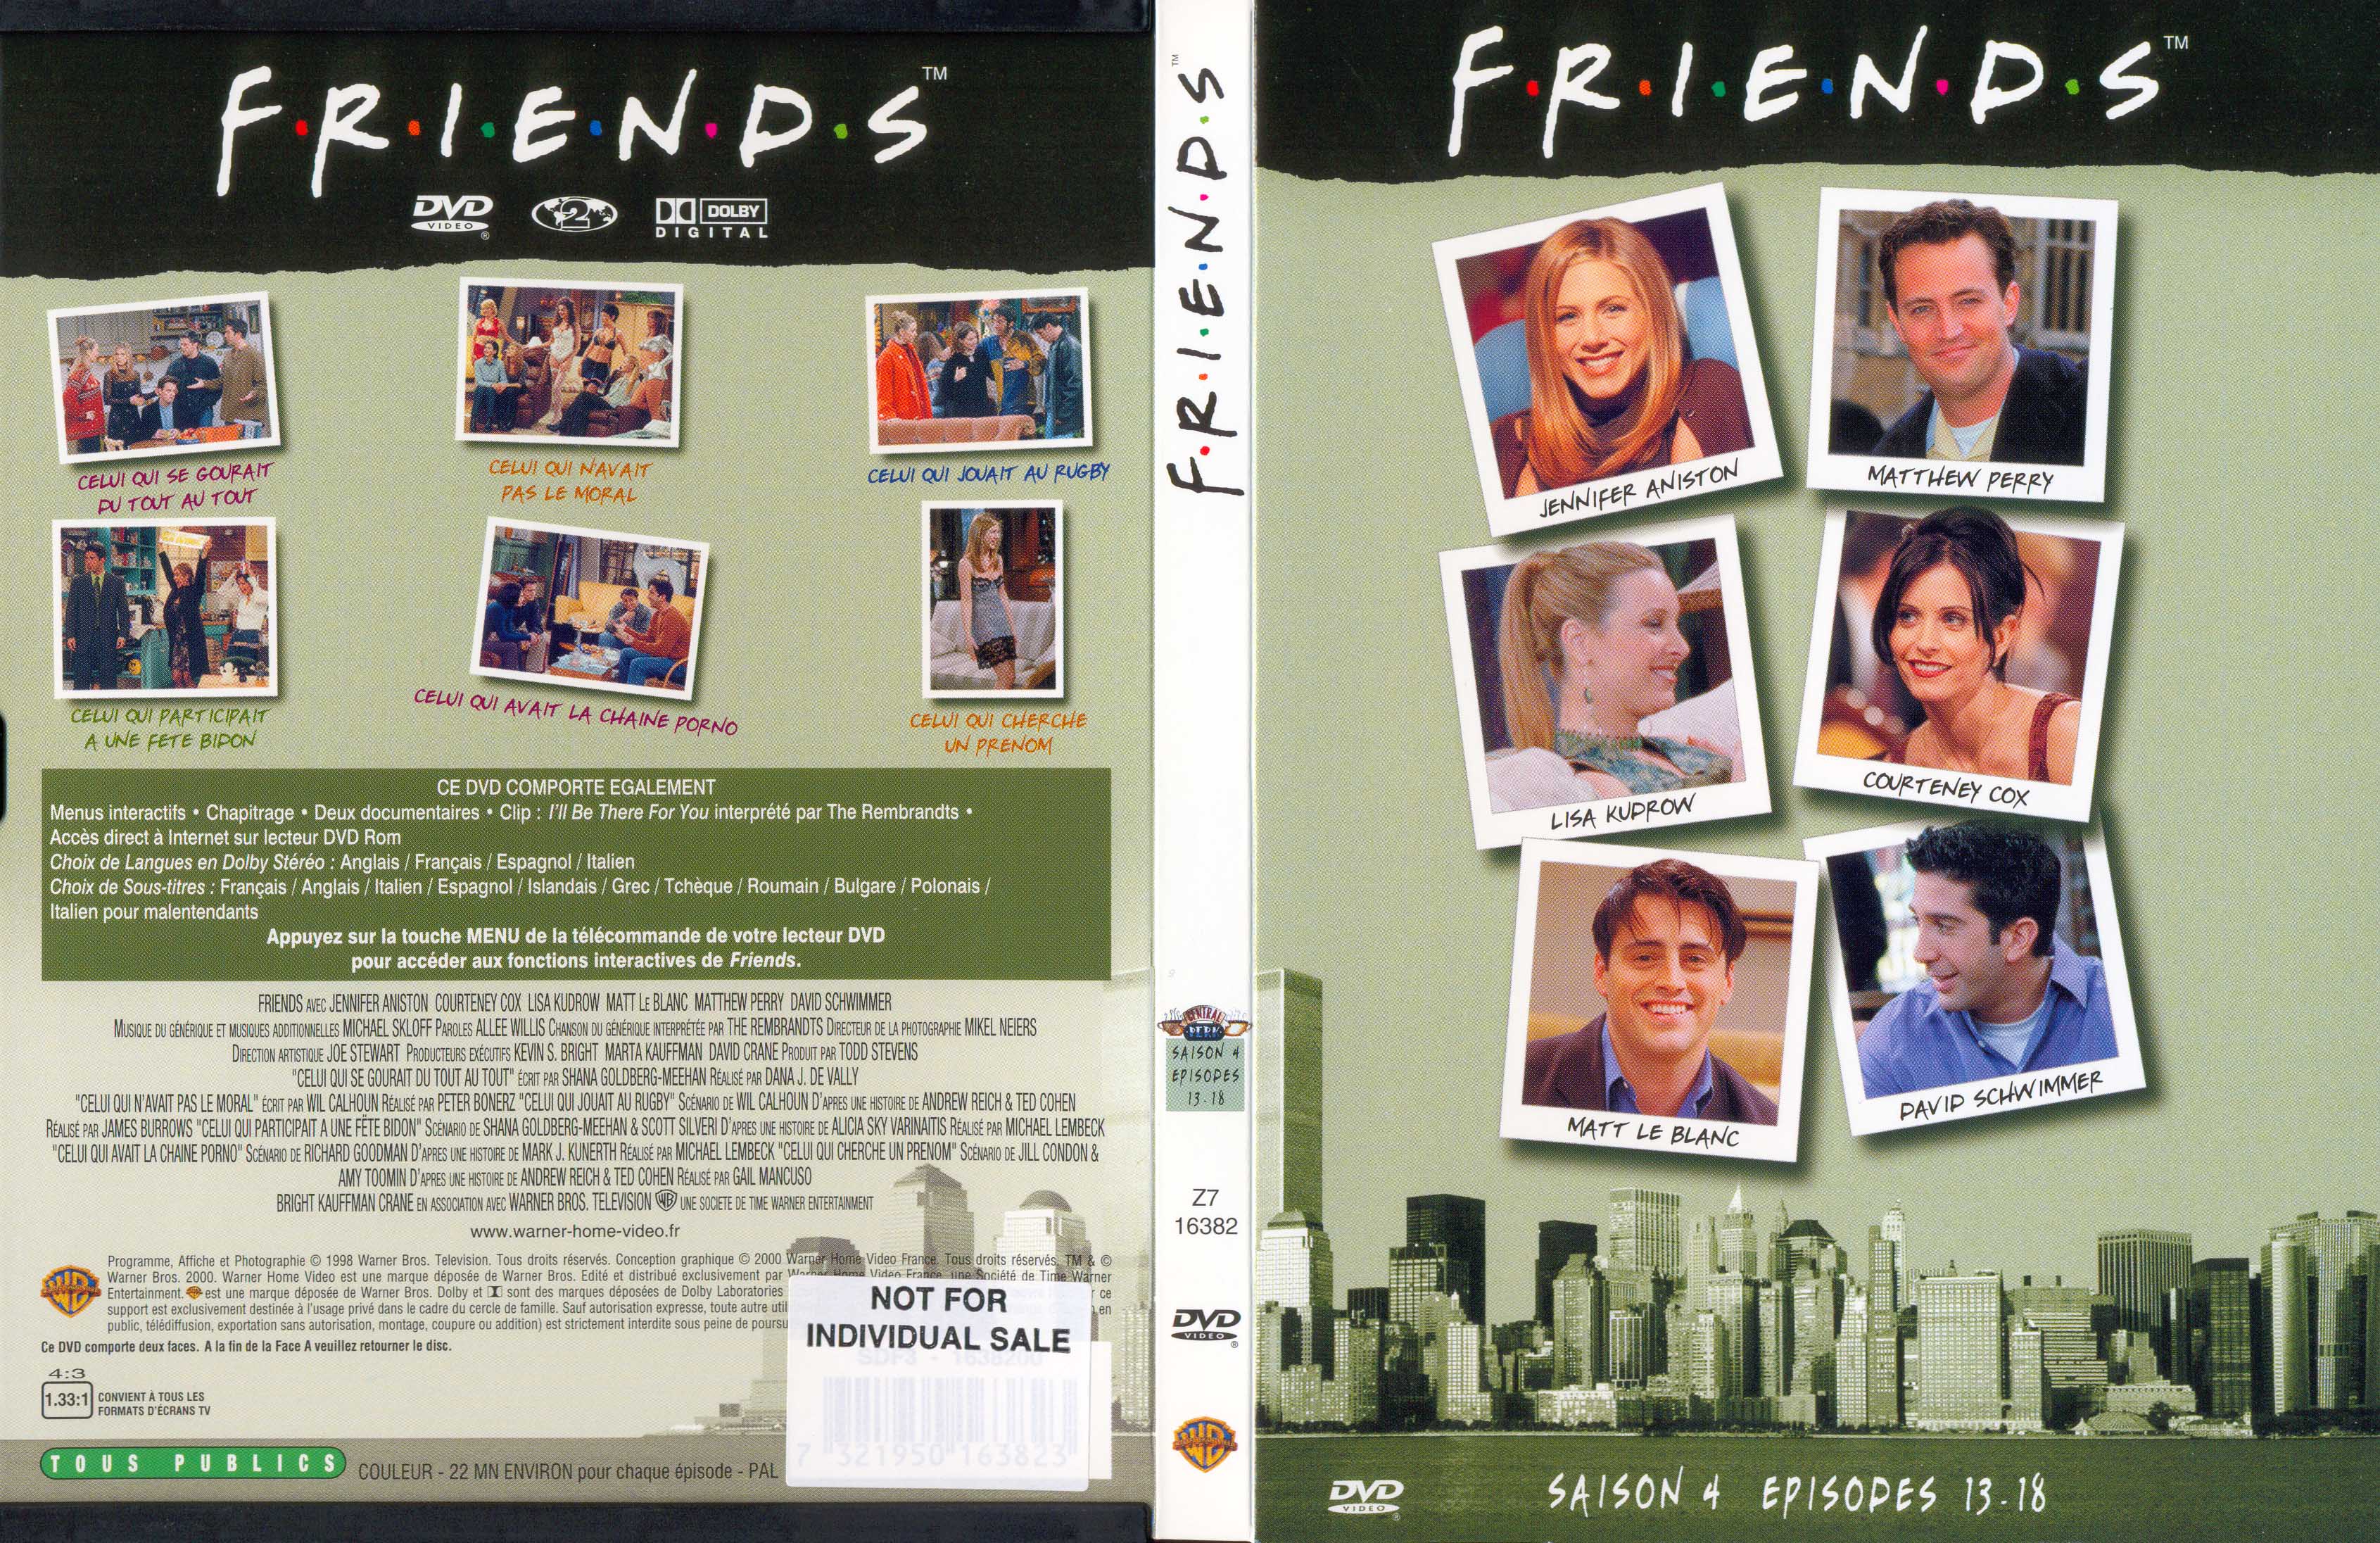 Jaquette DVD Friends saison 4 dvd 4